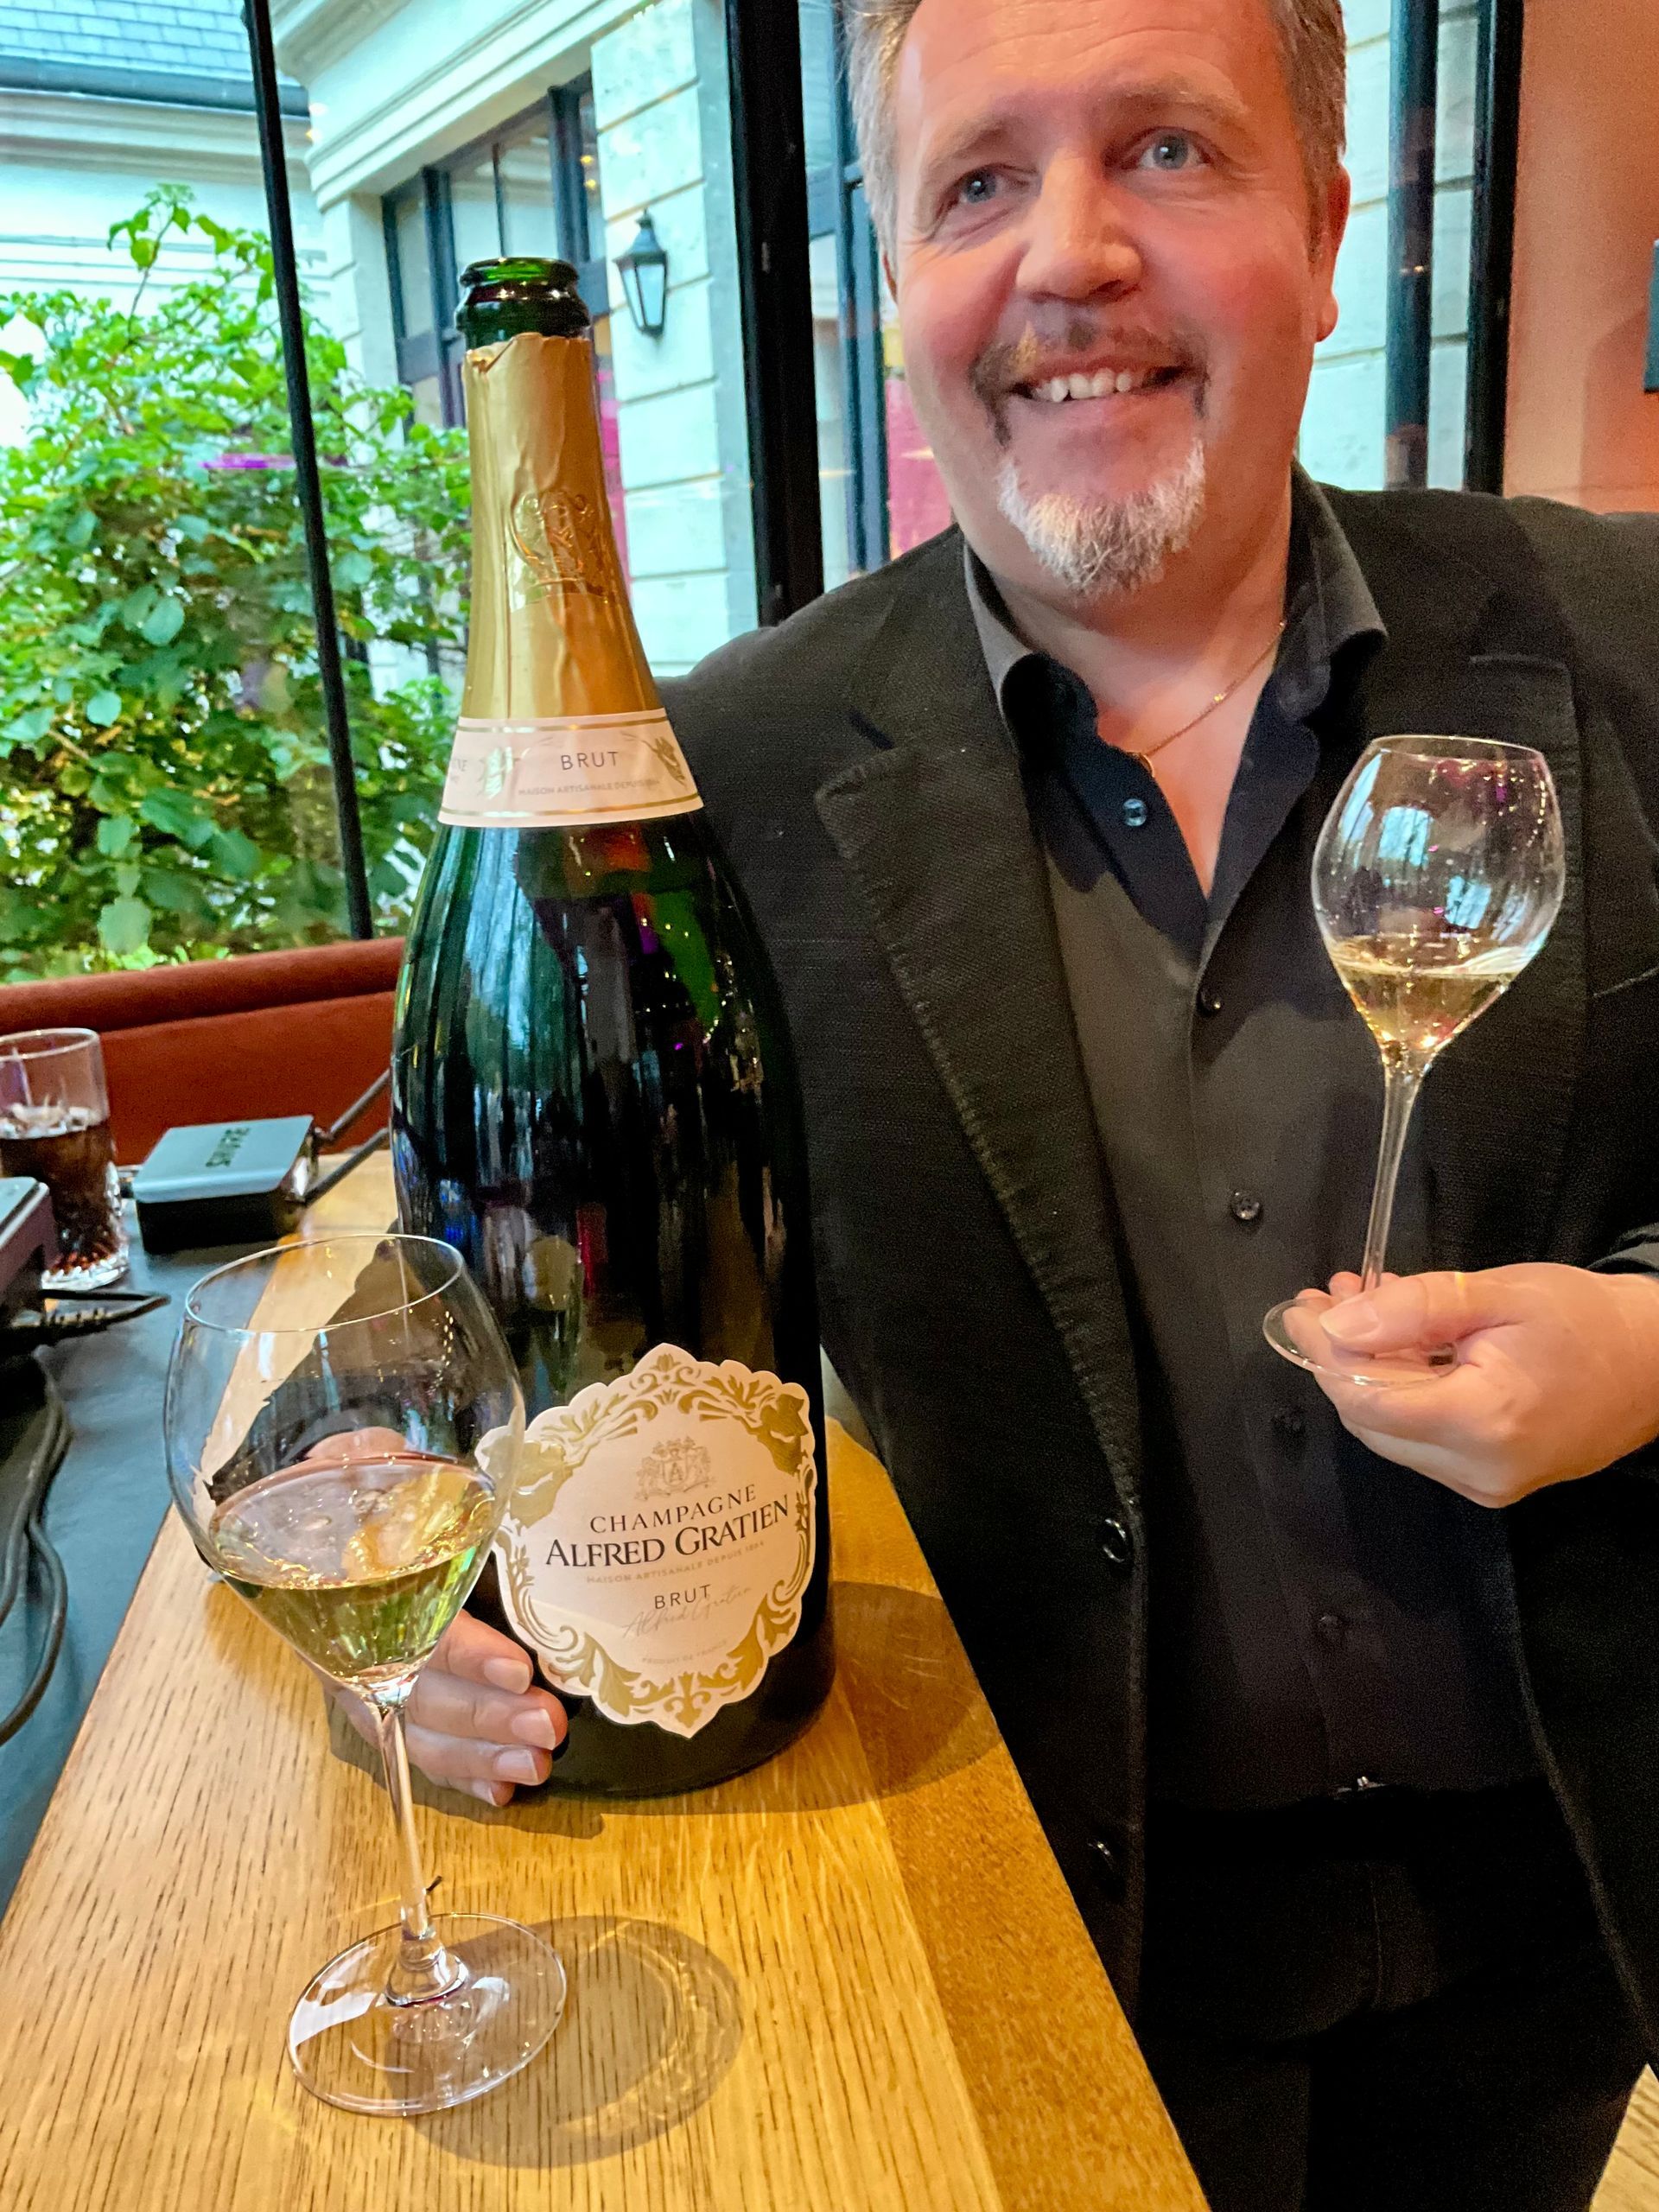 Champagne Alfred Gratien in Jeroboam mit Nicolas Jaeger, Chef de Caves